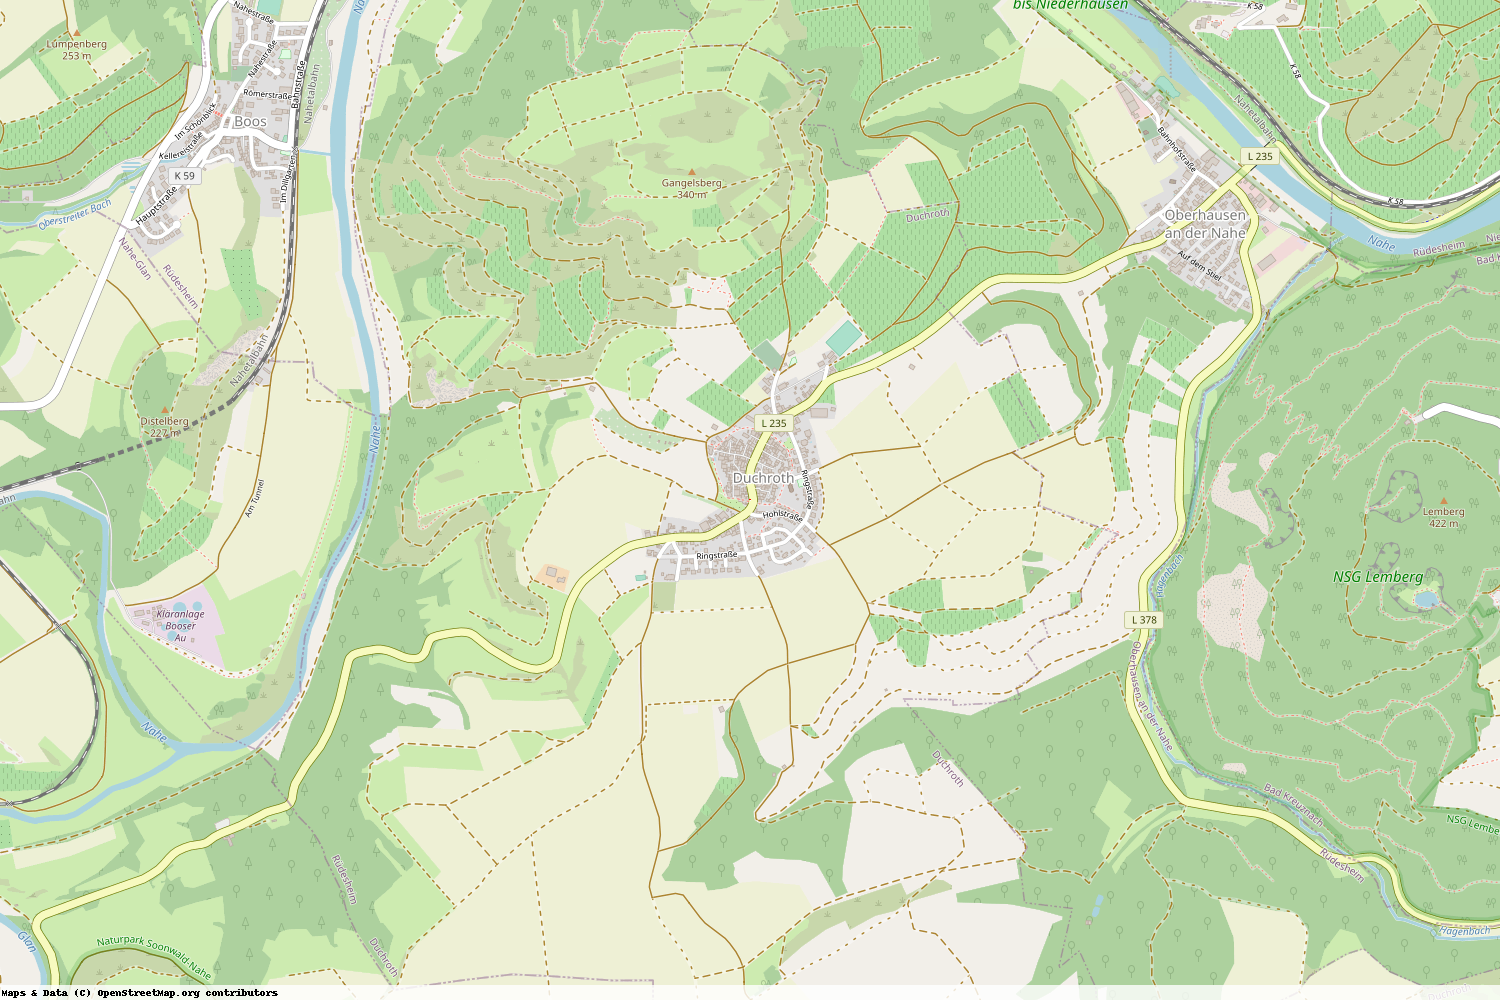 Ist gerade Stromausfall in Rheinland-Pfalz - Bad Kreuznach - Duchroth?